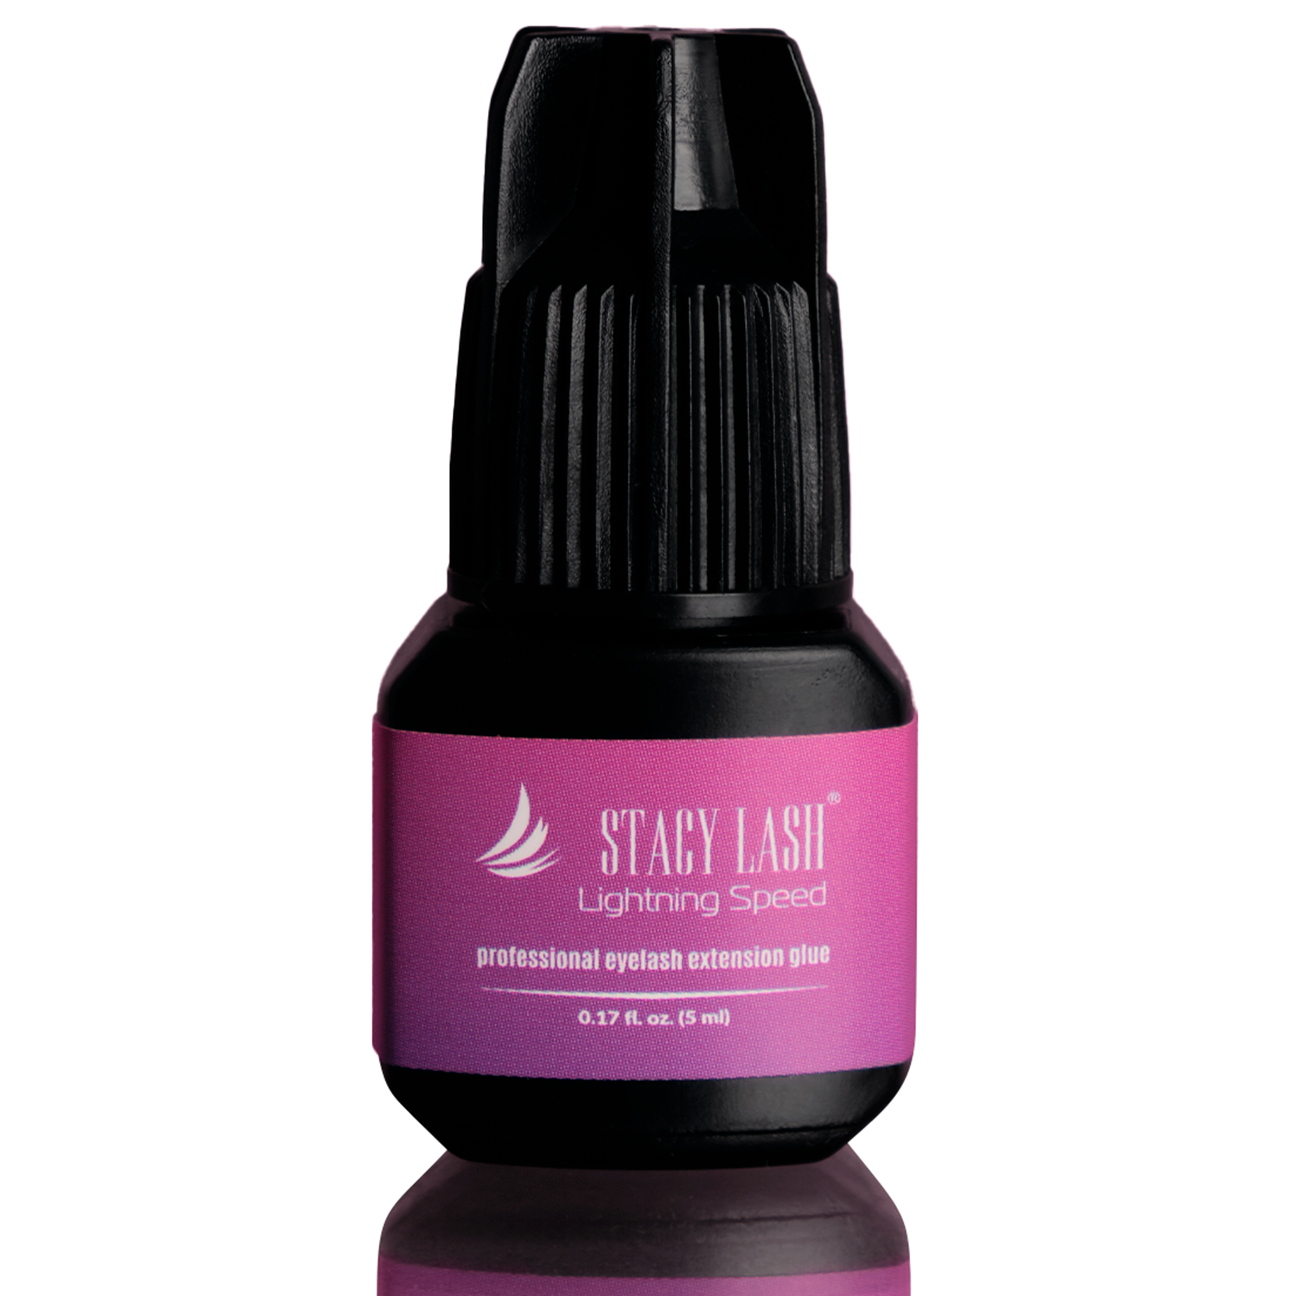 Stacy Lash Lightning Speed Eyelash Extension Glue - 5ml